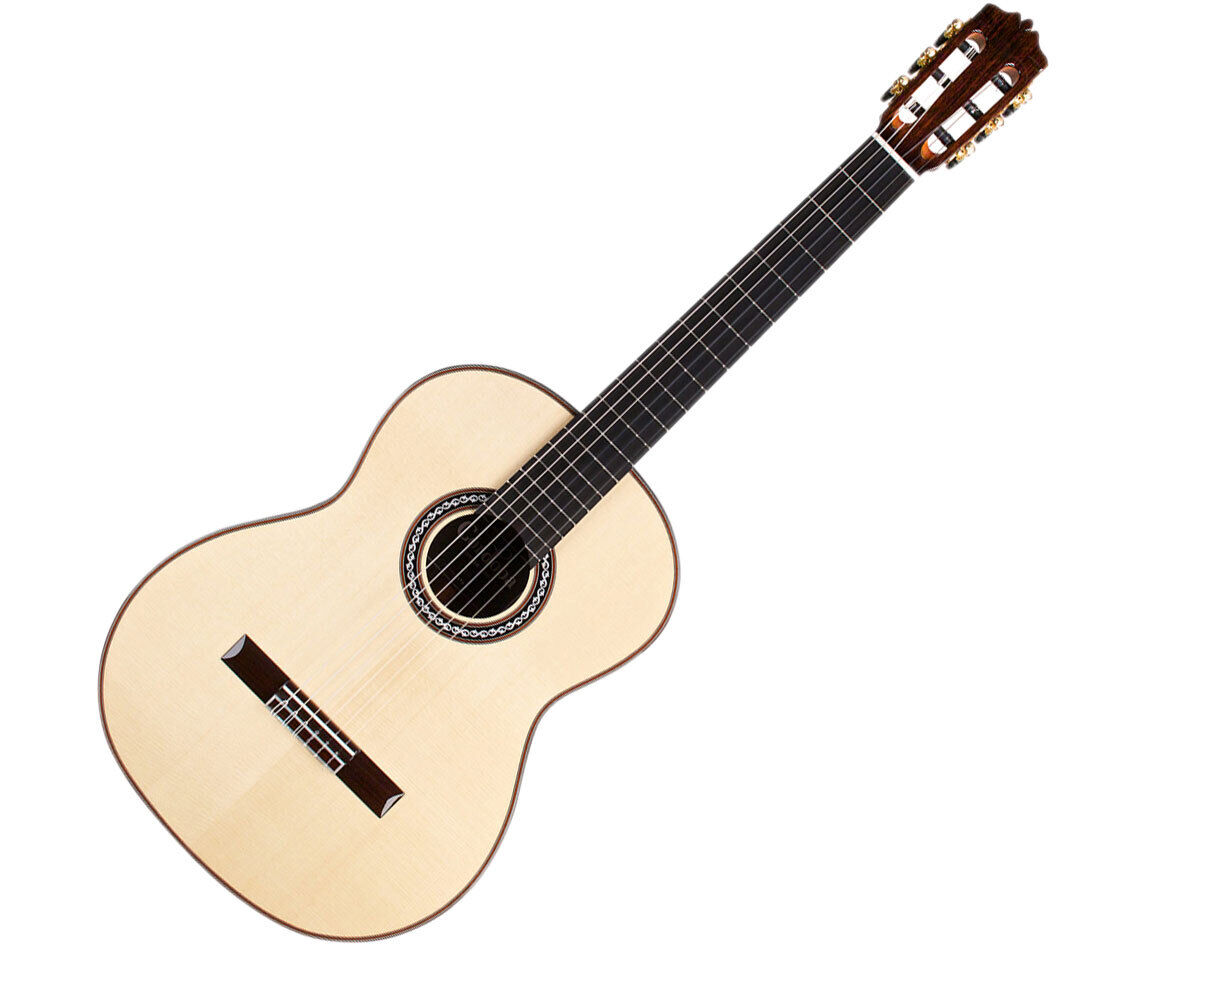 Cordoba C10 SP Classical Nylon String Guitar - European Spruce Top - Open Box